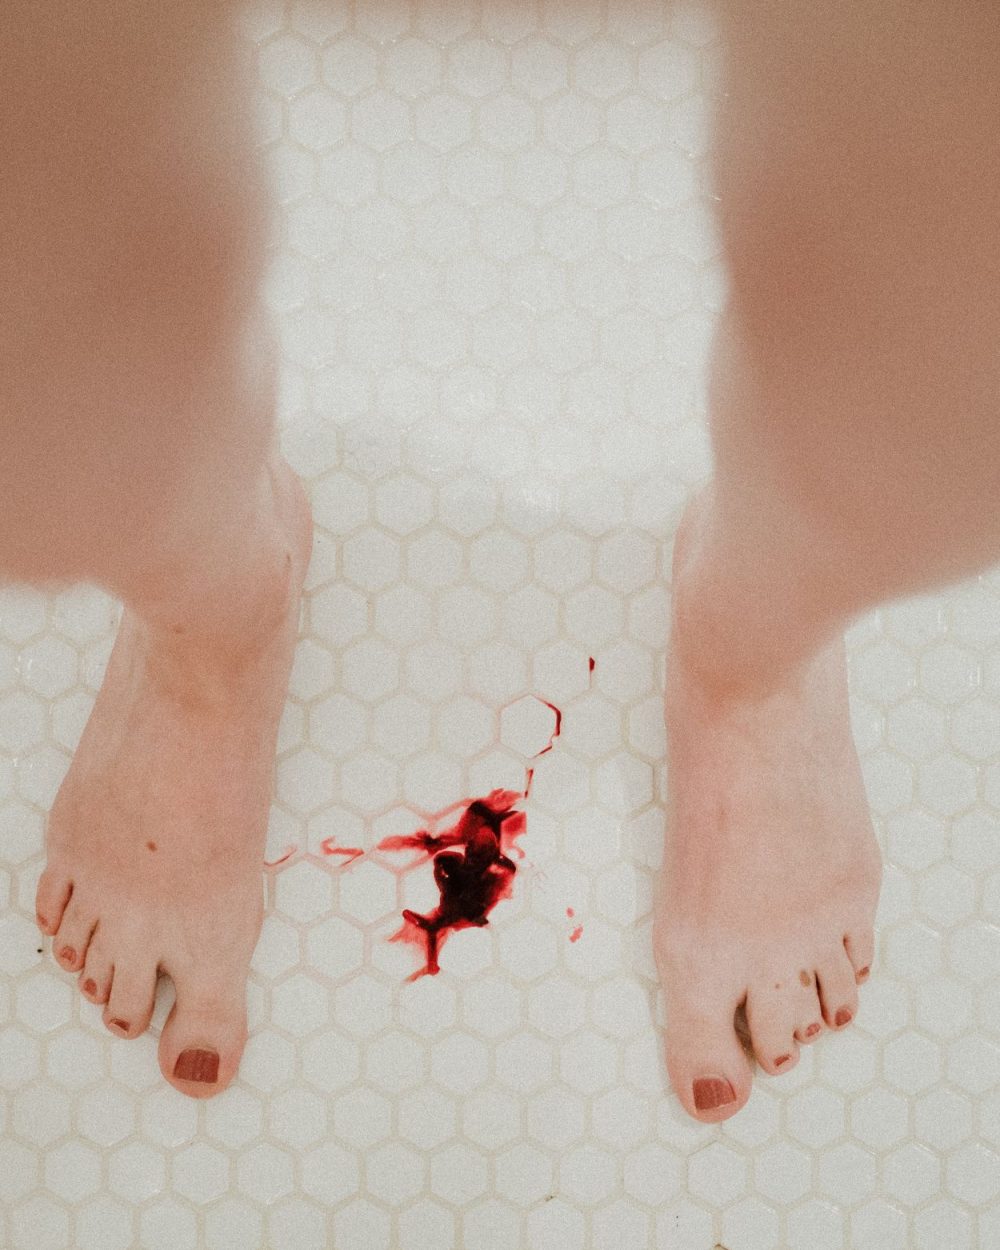 A person bleeding